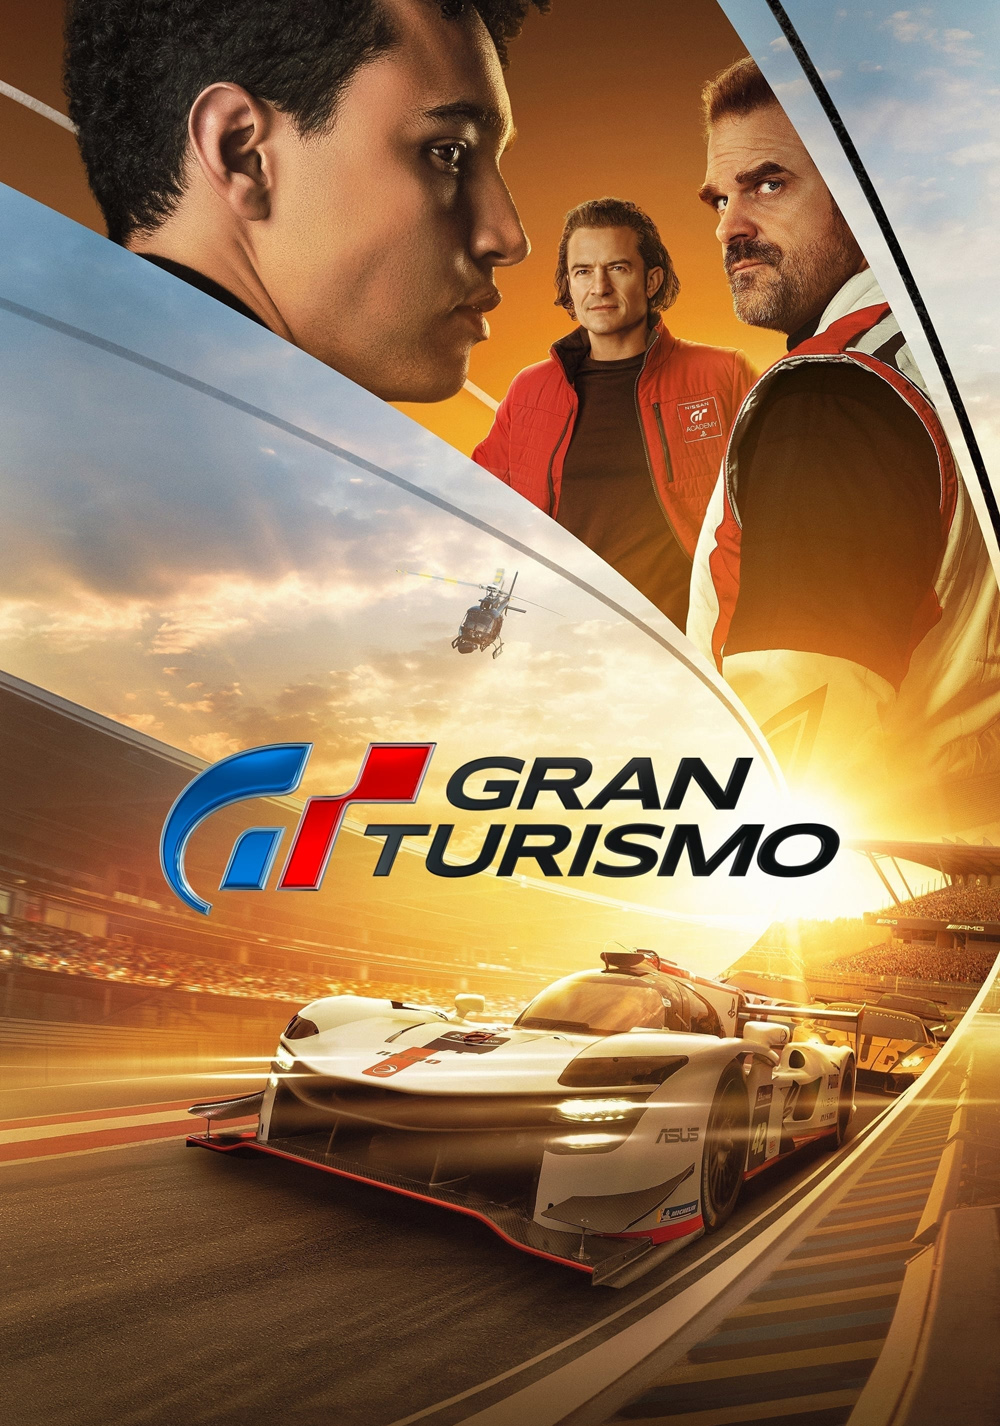 Stiahni si UHD Filmy Gran Turismo (2023)(CZ/EN)  [UHD Remux] = CSFD 78%